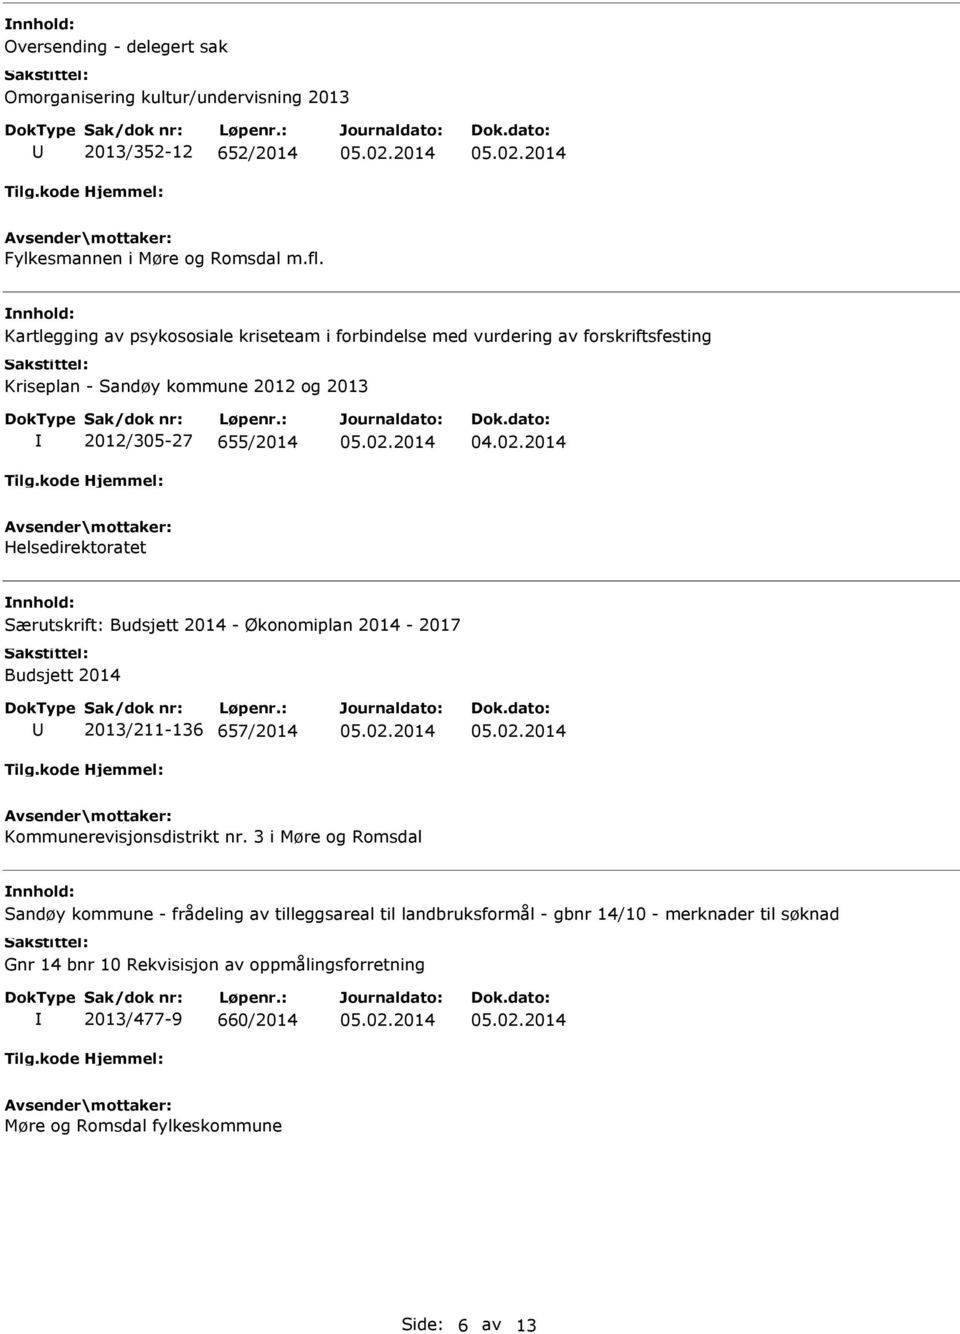 Helsedirektoratet Særutskrift: Budsjett 2014 - Økonomiplan 2014-2017 Budsjett 2014 2013/211-136 657/2014 Kommunerevisjonsdistrikt nr.